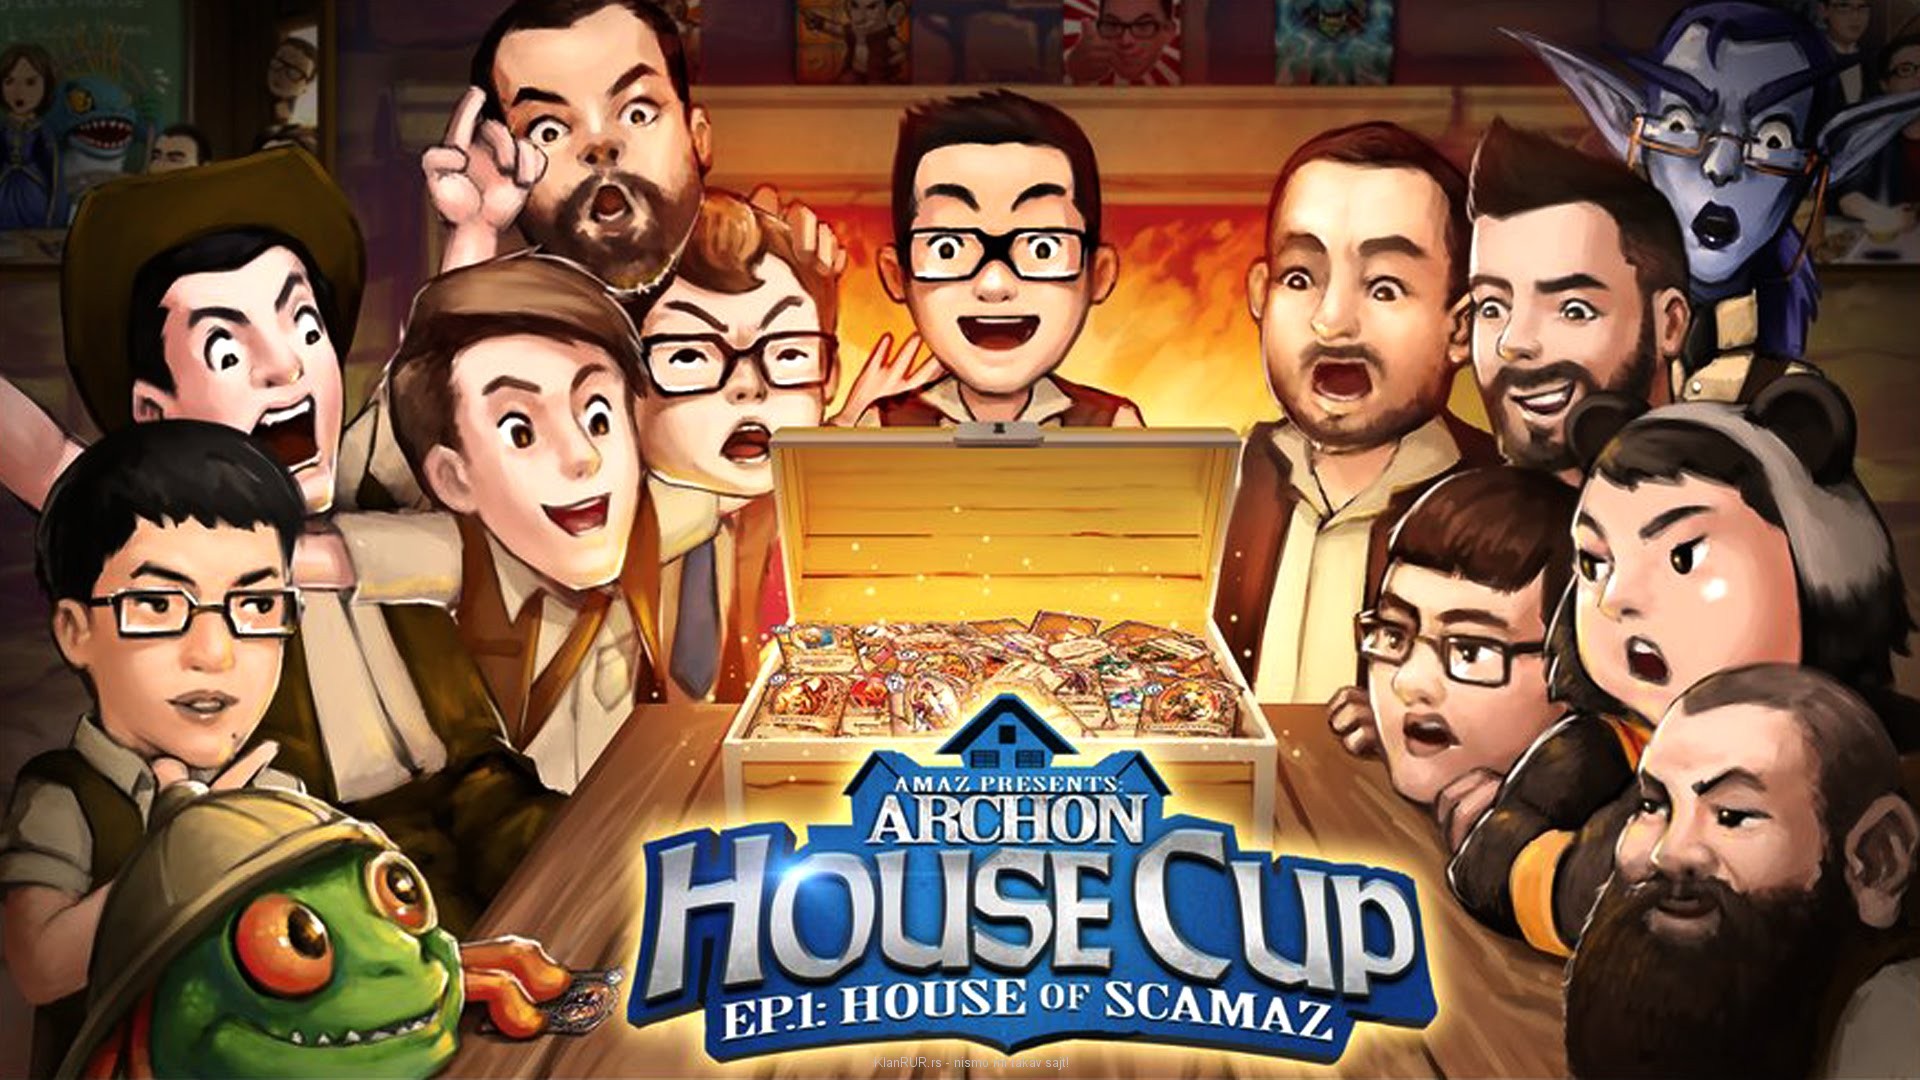 Archon House Cup Logo